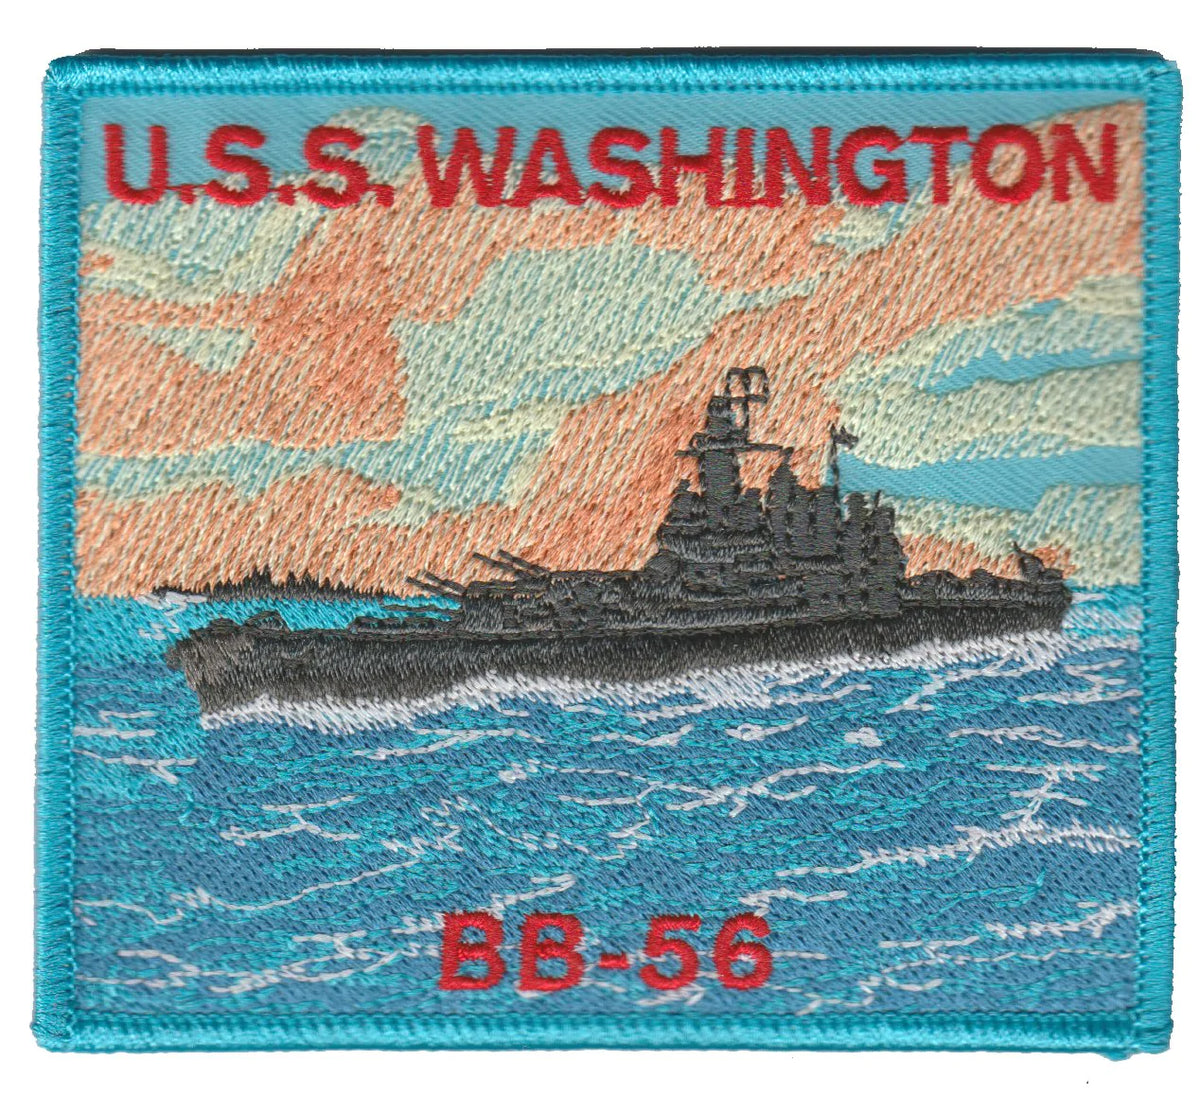 U.S.S. Washington BB-56 Patch - U.S. Navy - CLEARANCE!